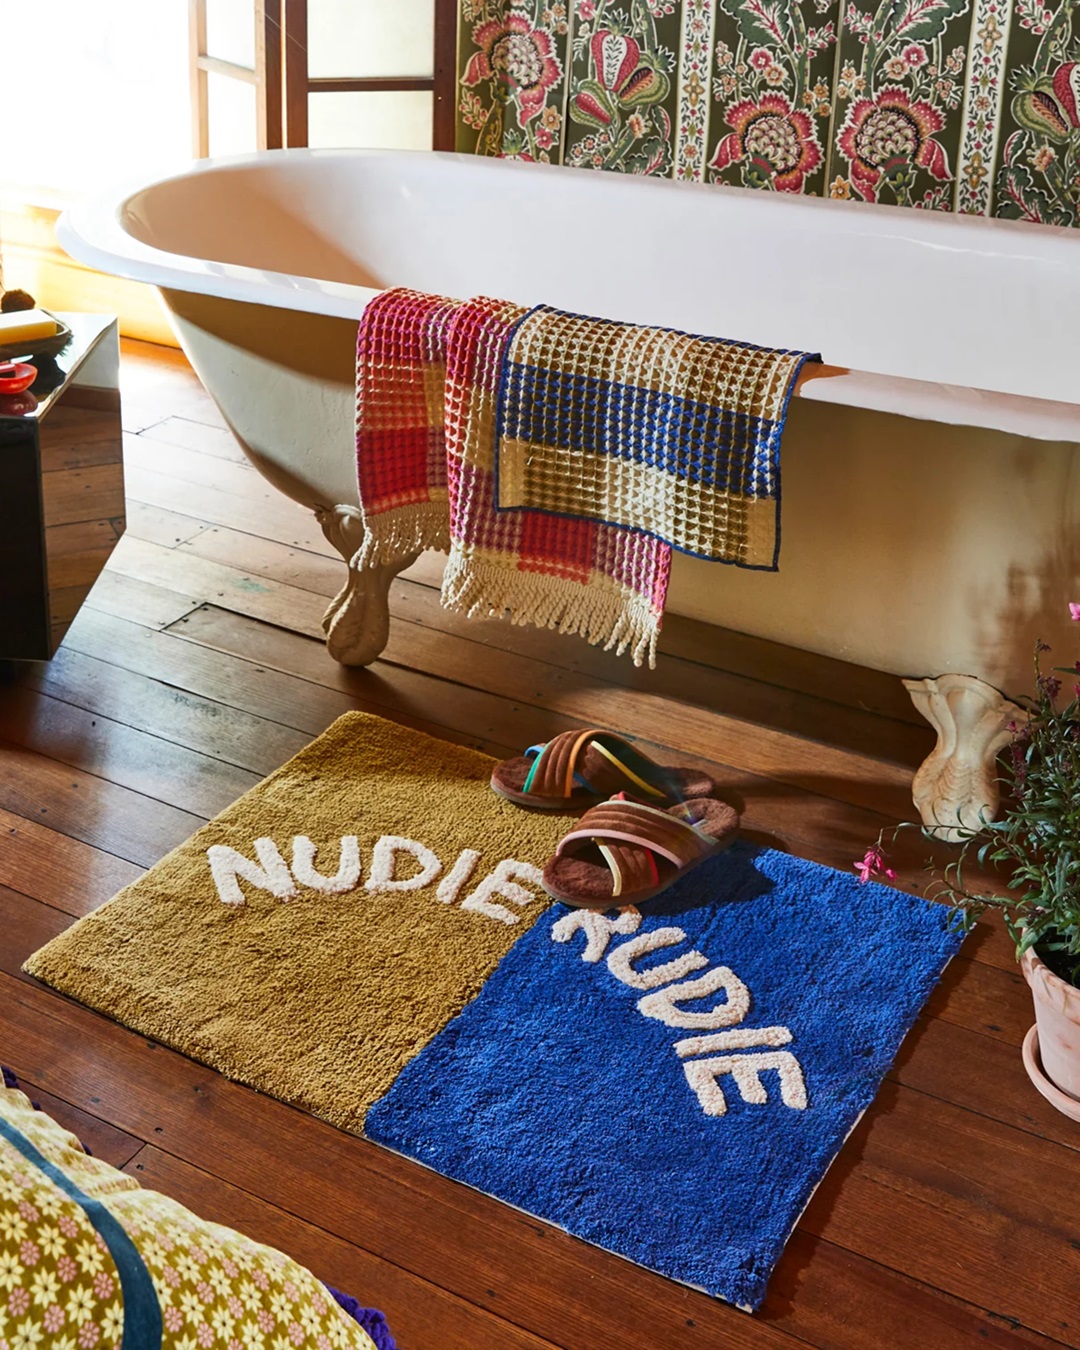 Blue and green Nudie rudie bath mat in front of bath on wooden floor